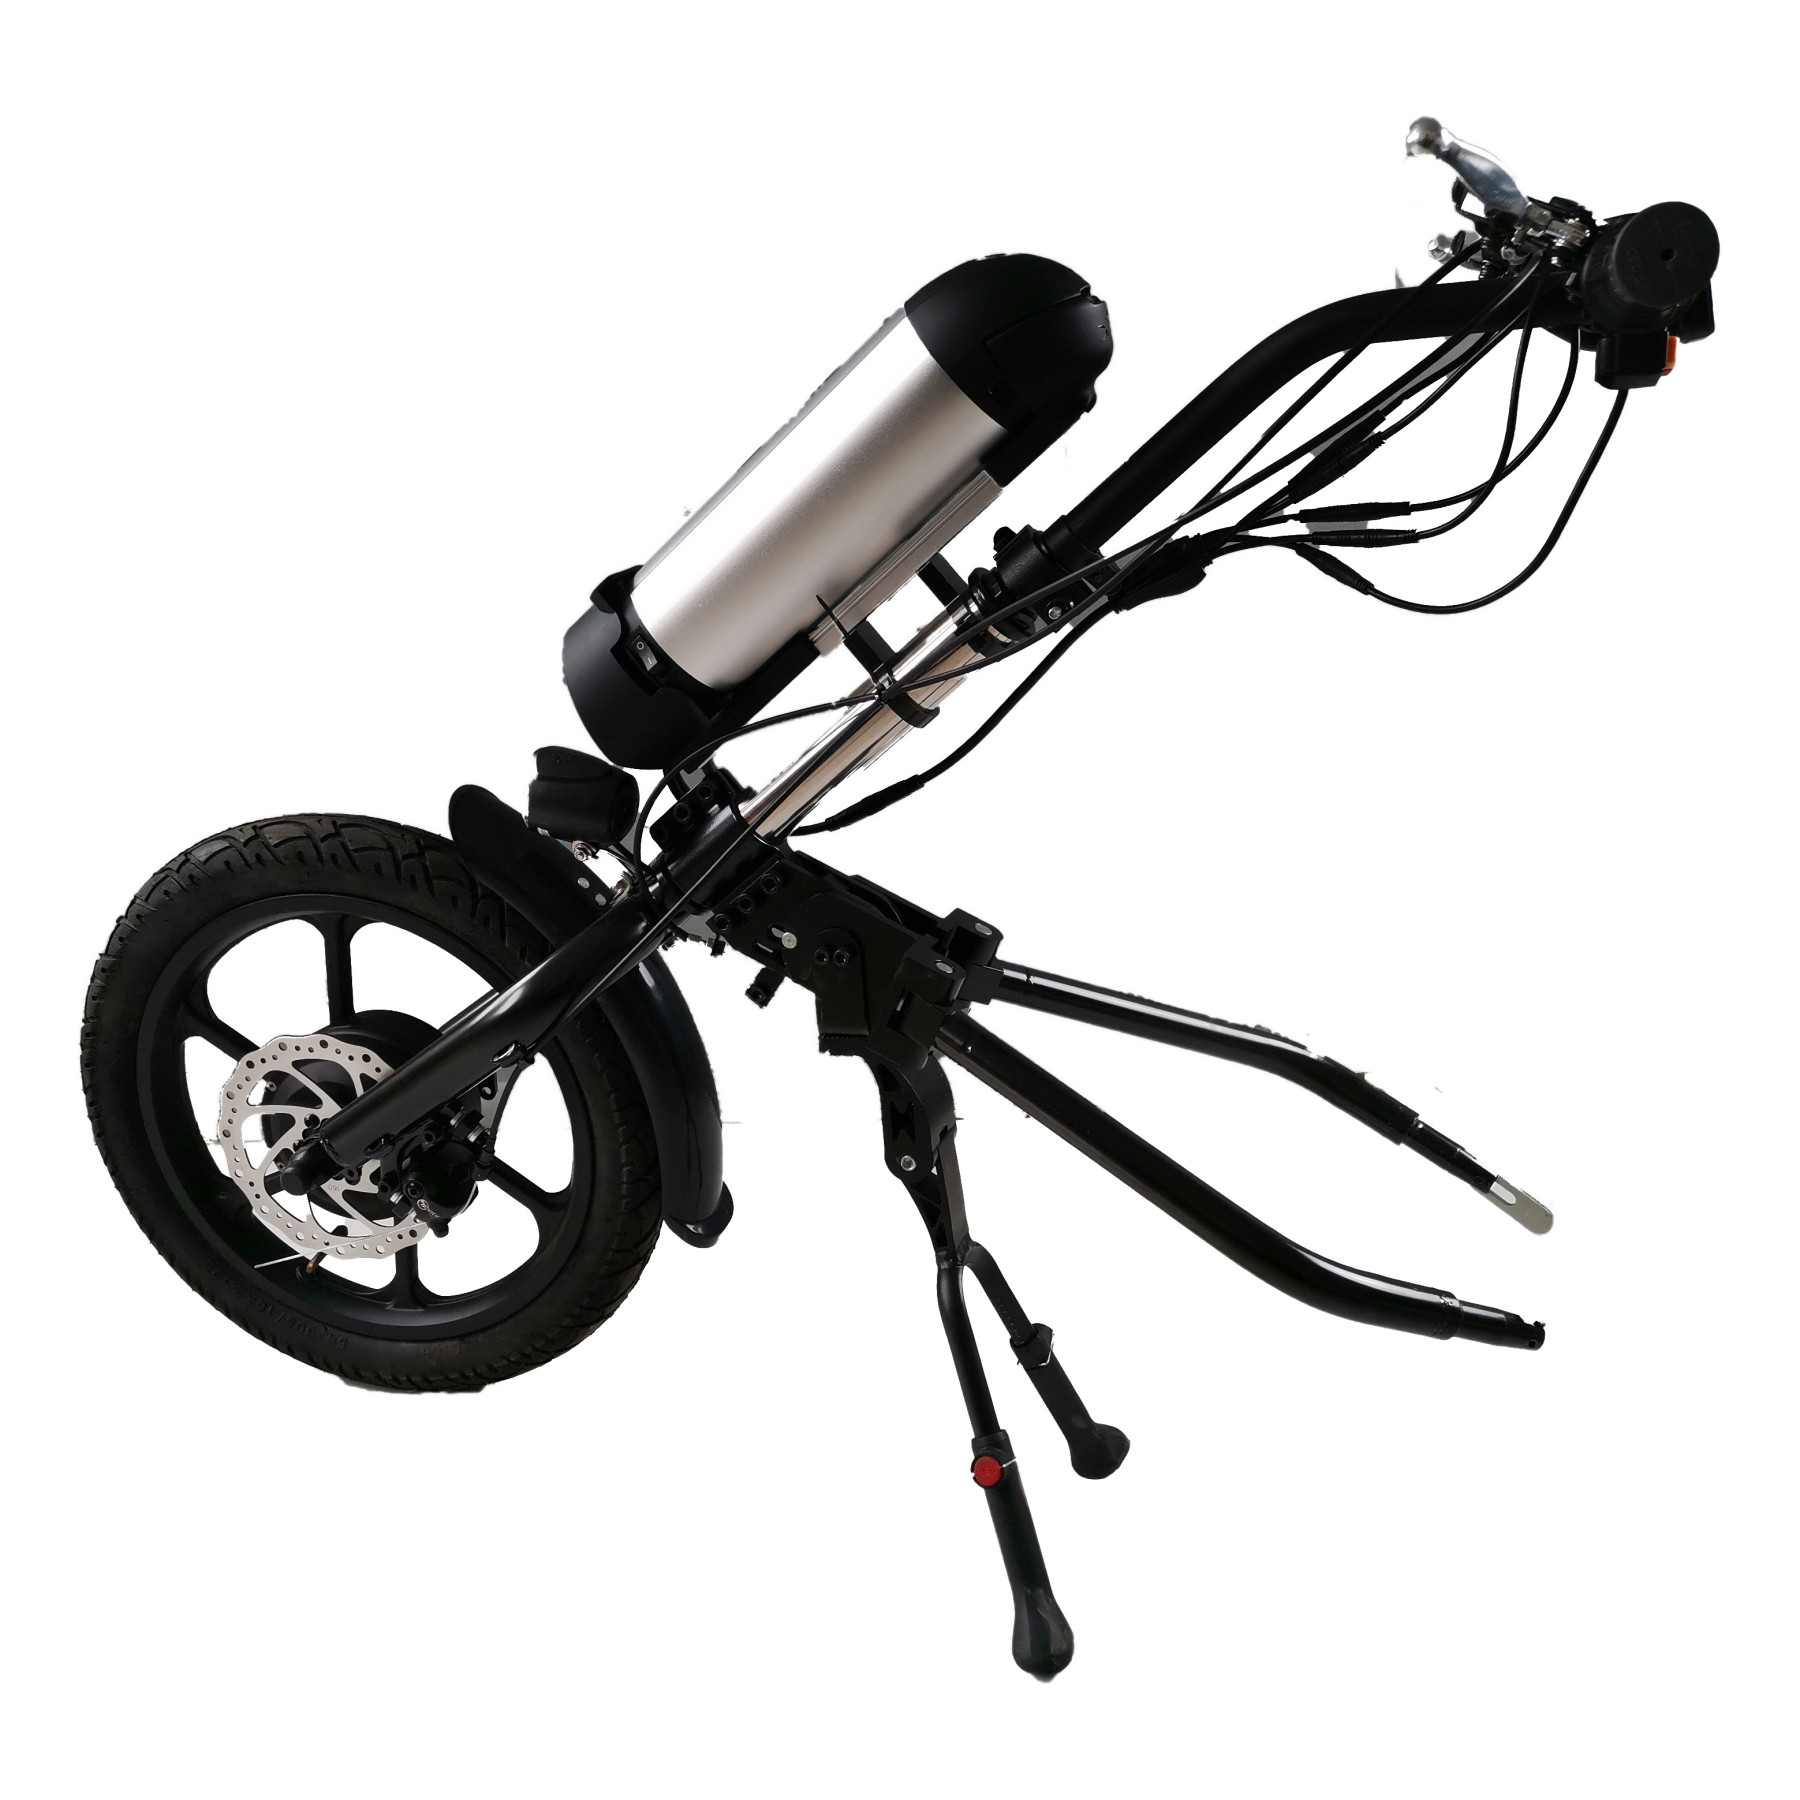 Kit eléctrico para silla de ruedas 500W